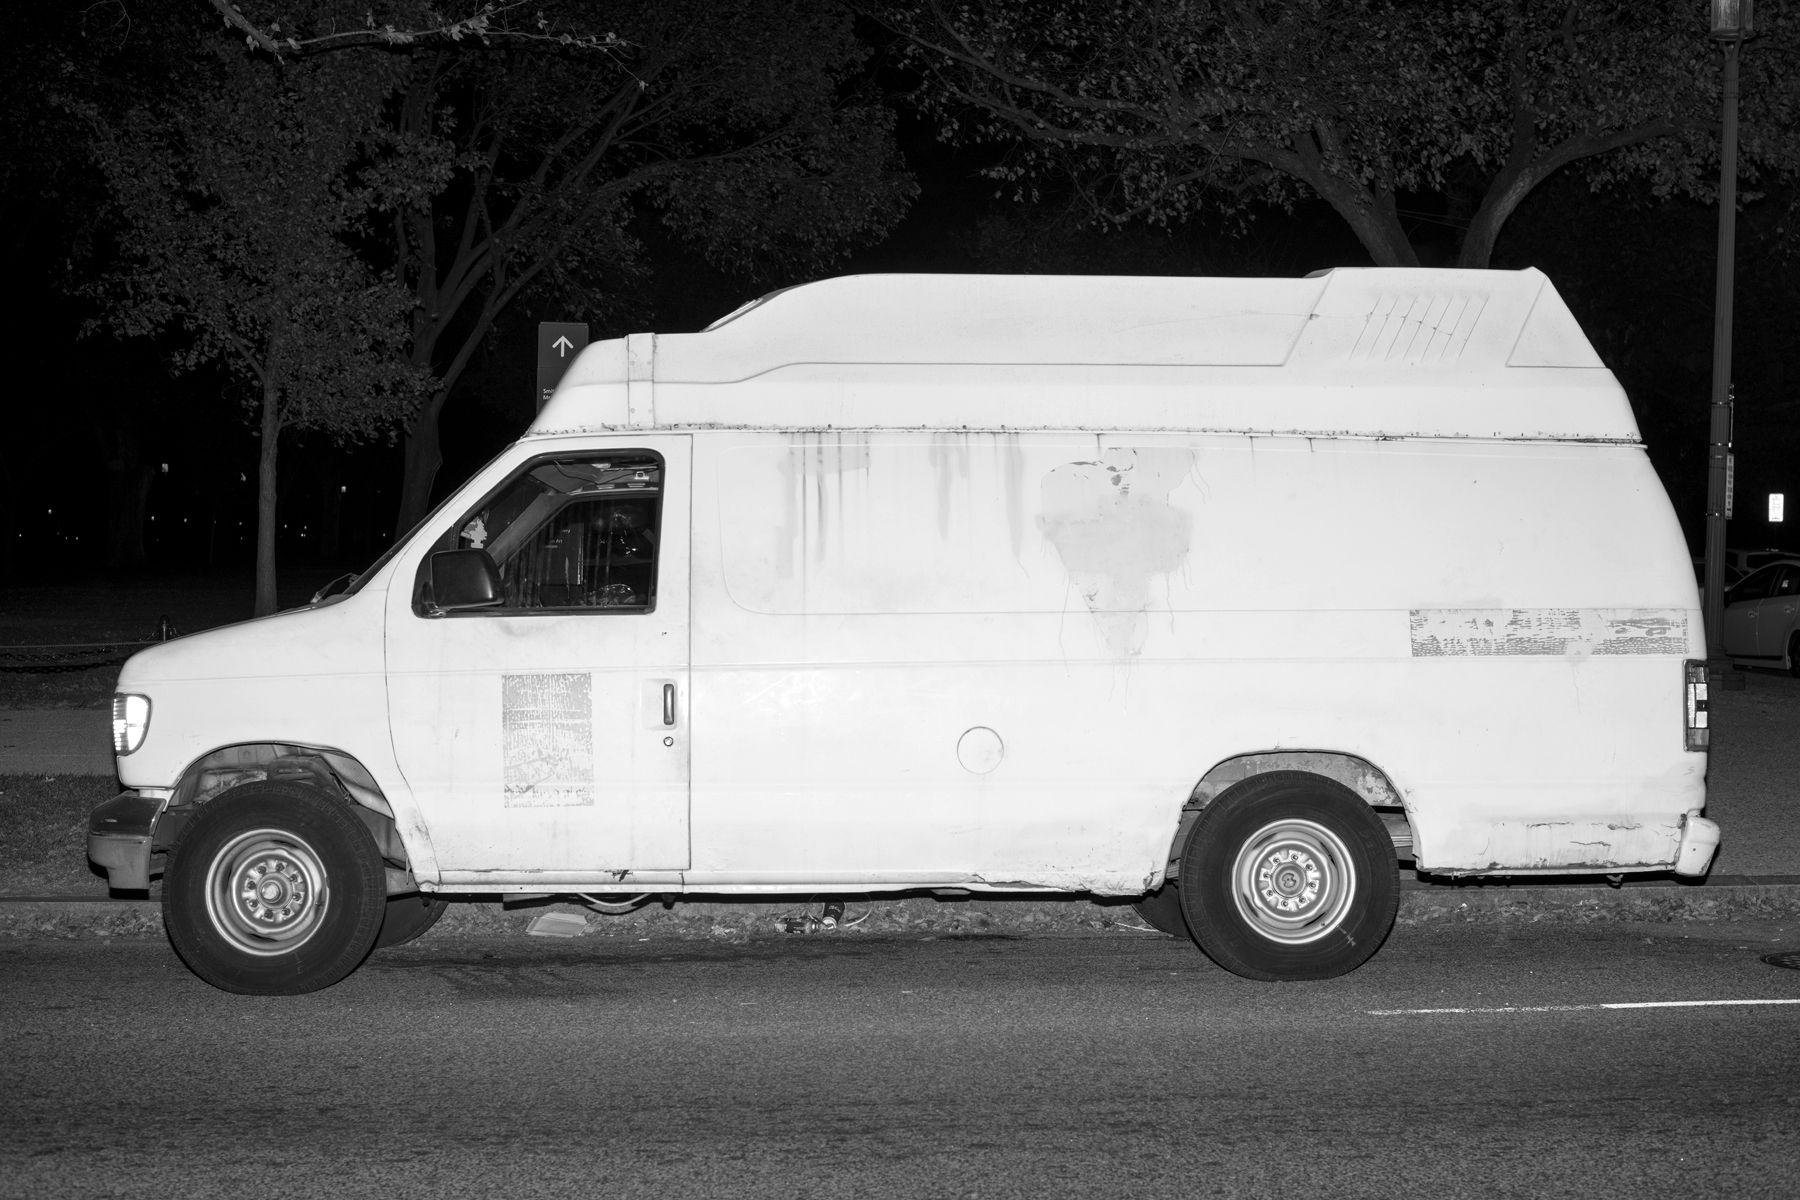 Black and White Vans Car Logo - White Vans & Black Suburbans | The New Republic